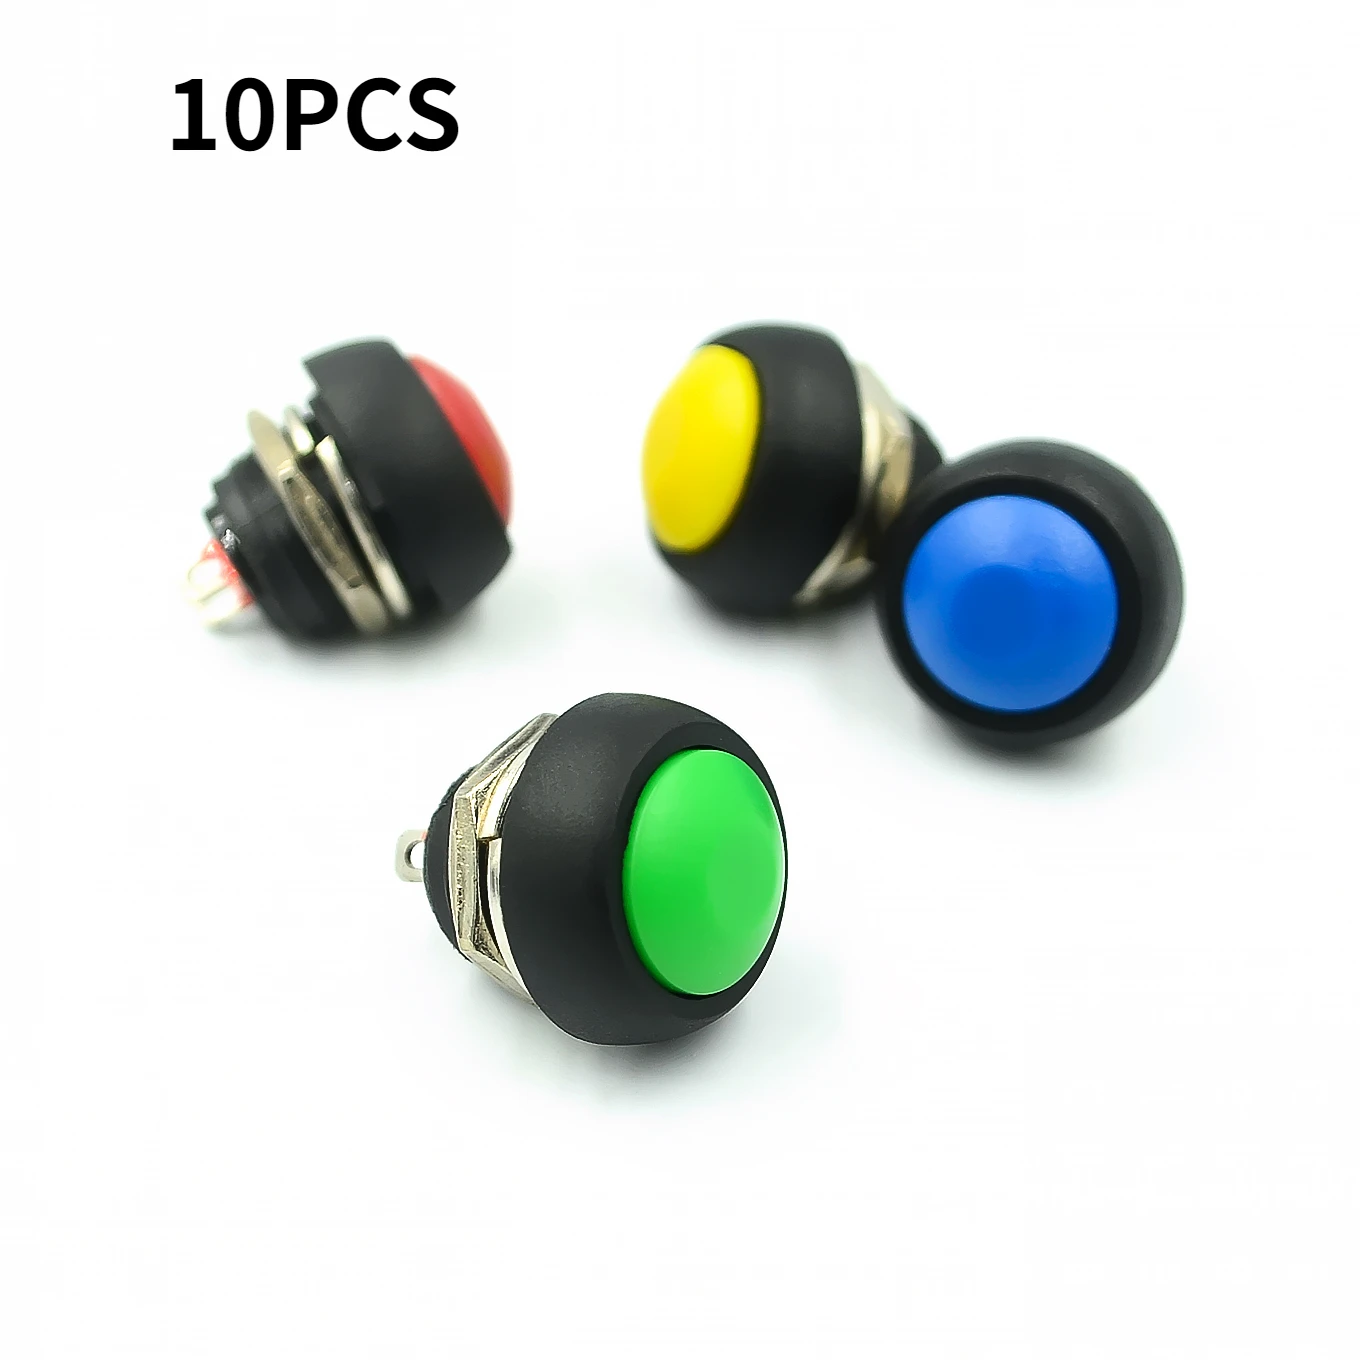 

10PCS 12mm Waterproof Momentary Push button Switch reset Non-locking pbs-33b Black white yellow orange blue green red Diy kit